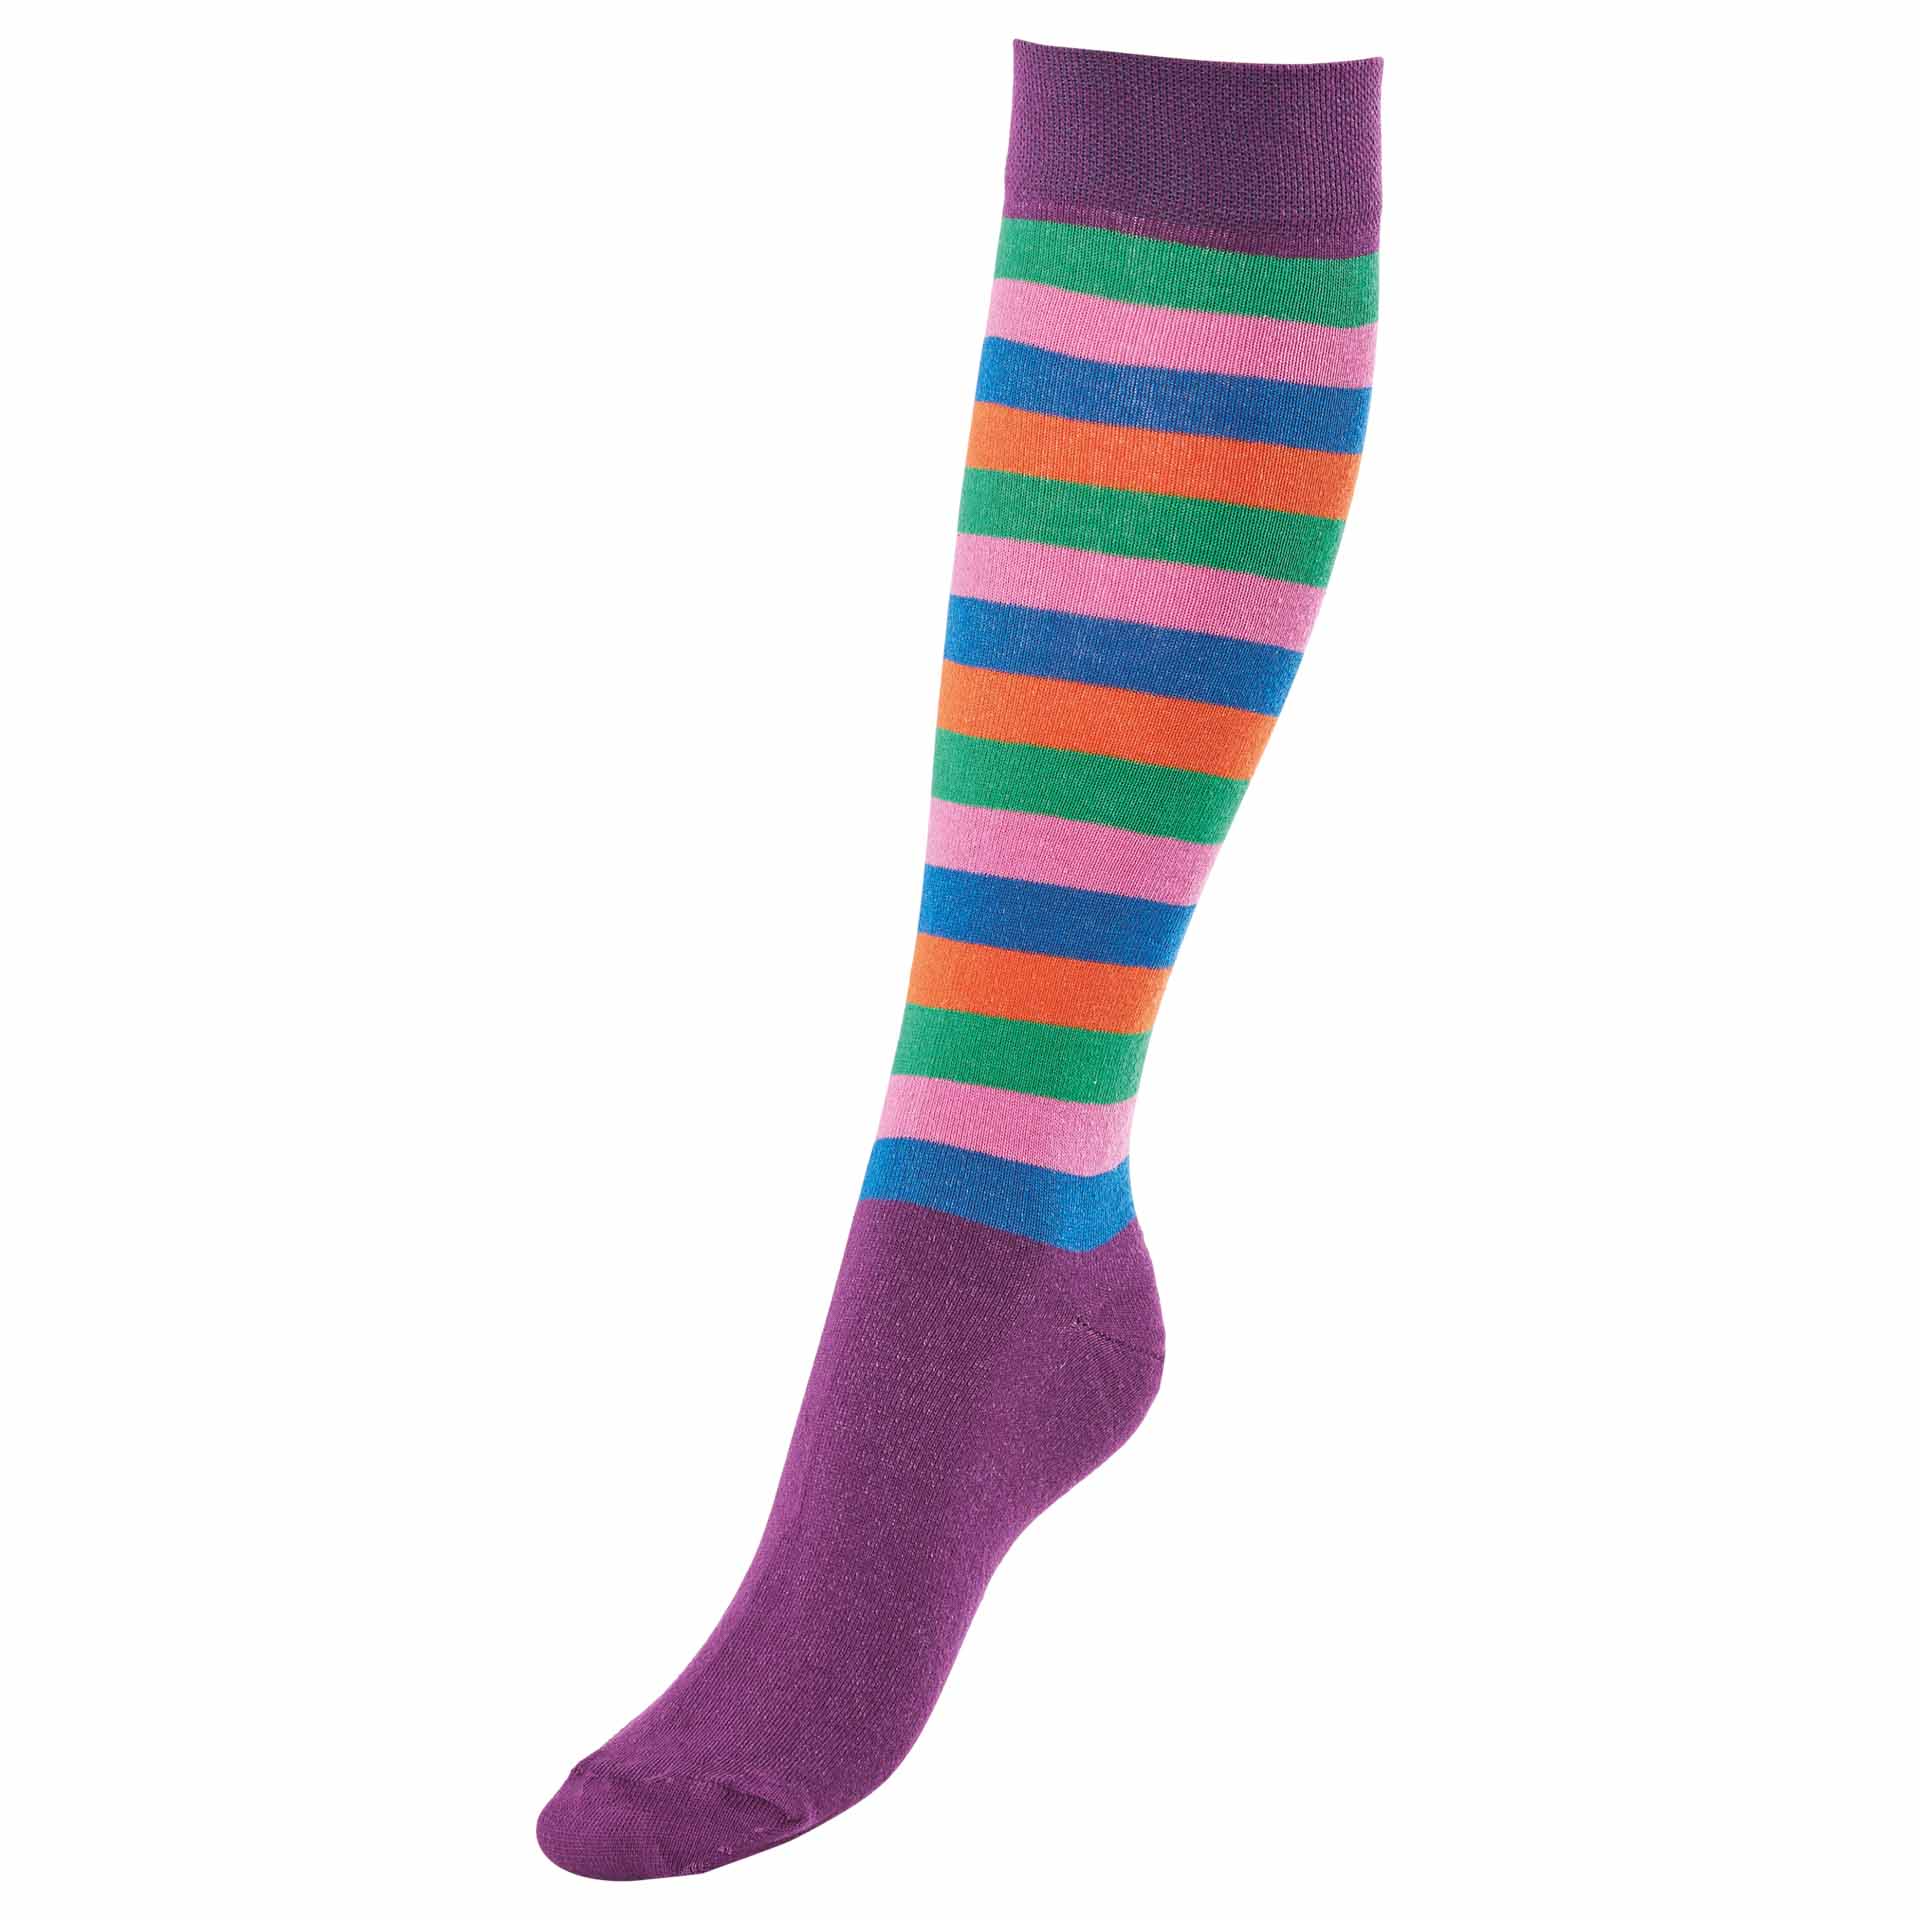 BUSSE Socken STRIPES 35-38 lila/orange/grün/rosa